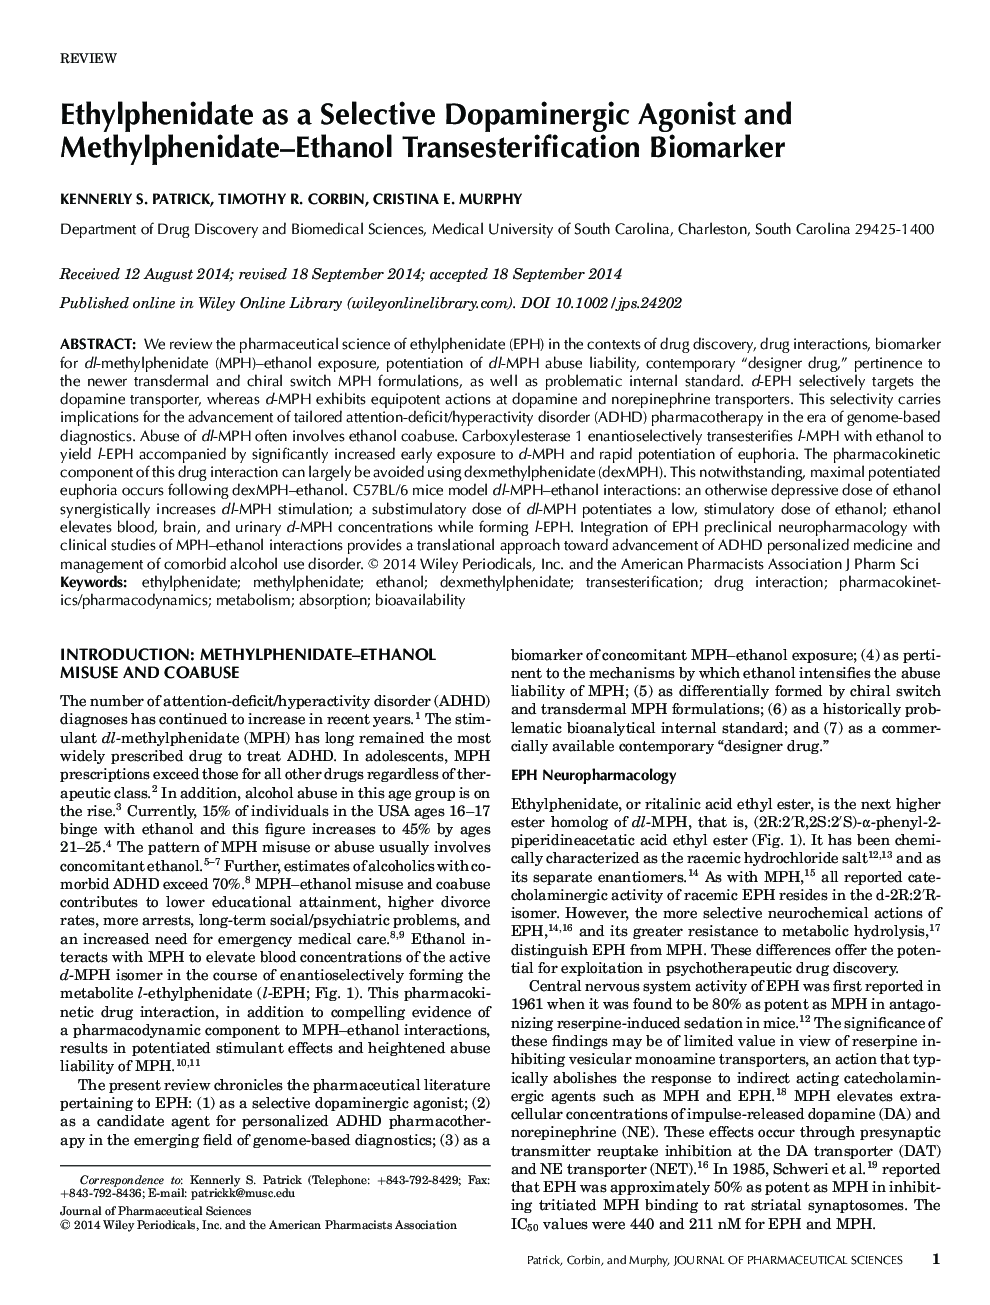 Ethylphenidate as a Selective Dopaminergic Agonist and Methylphenidate-Ethanol Transesterification Biomarker